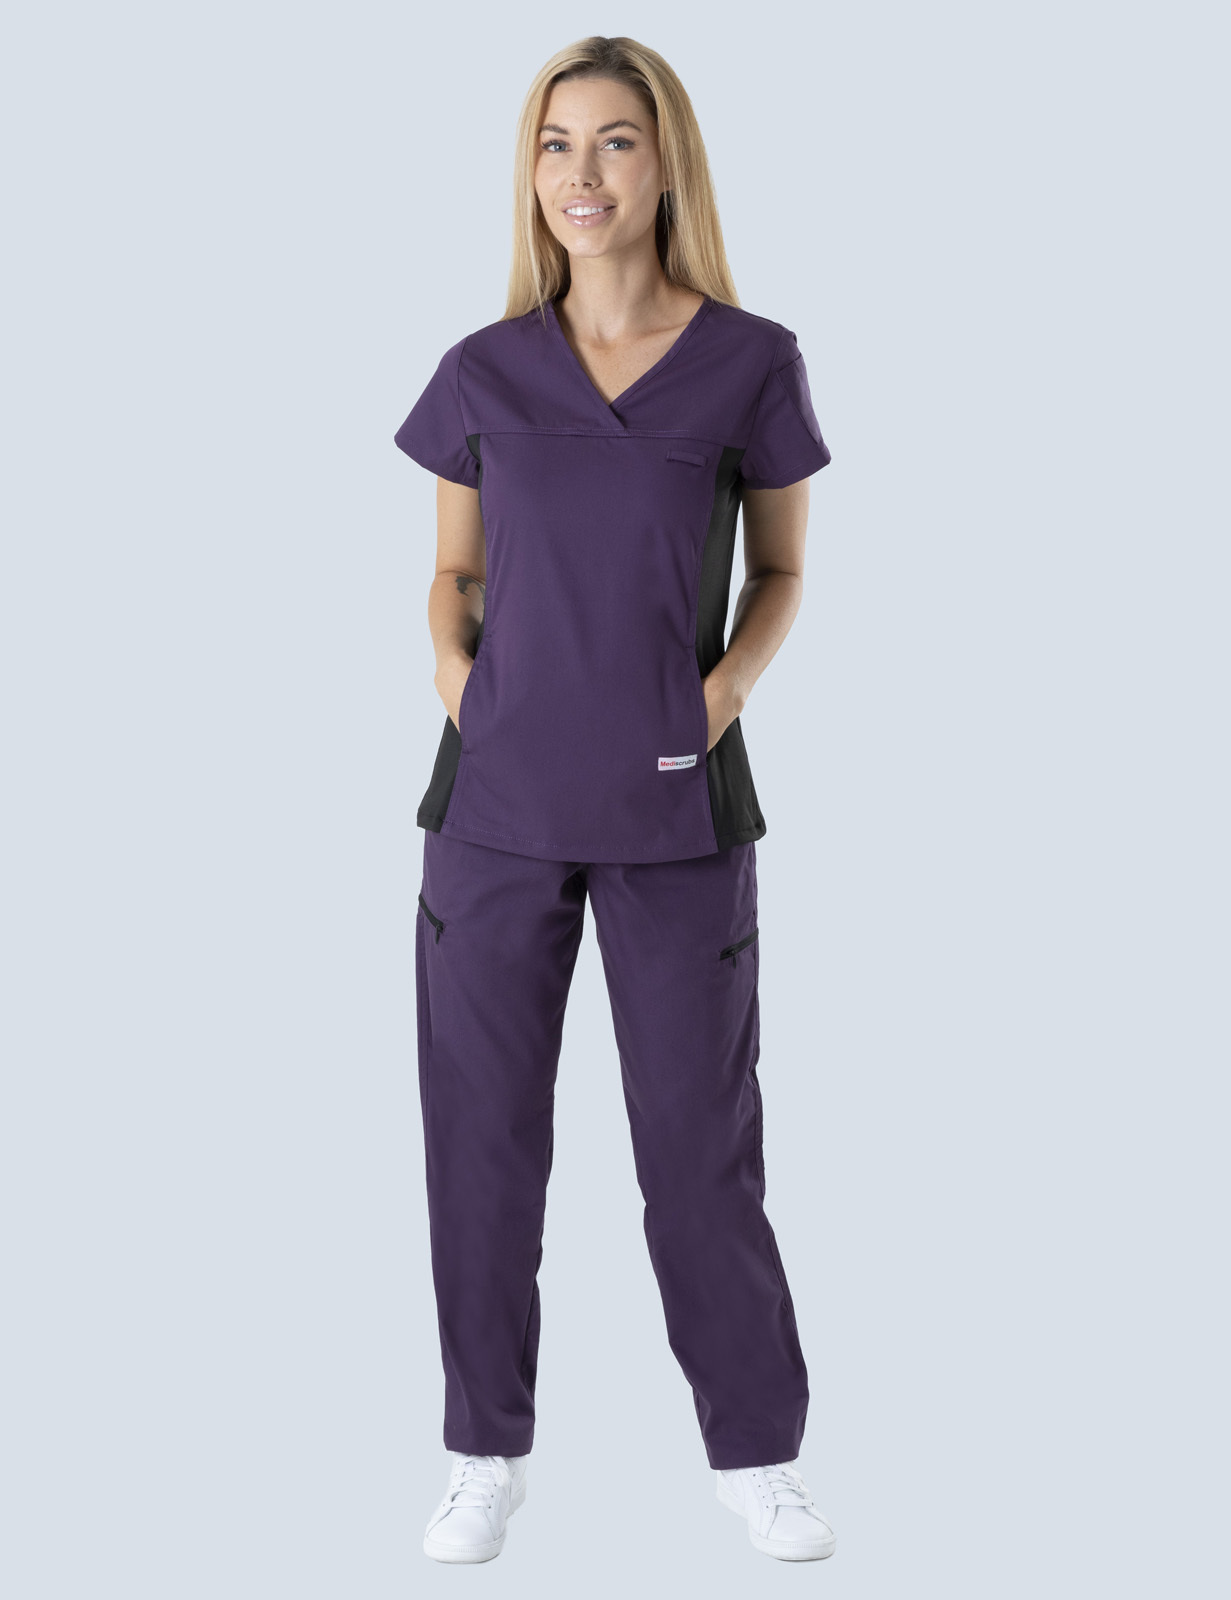 Biloela Hospital Healthcare Department Uniform Set Bundle (Women's Fit Spandex Top and Cargo pants in Aubergine incl Logos)